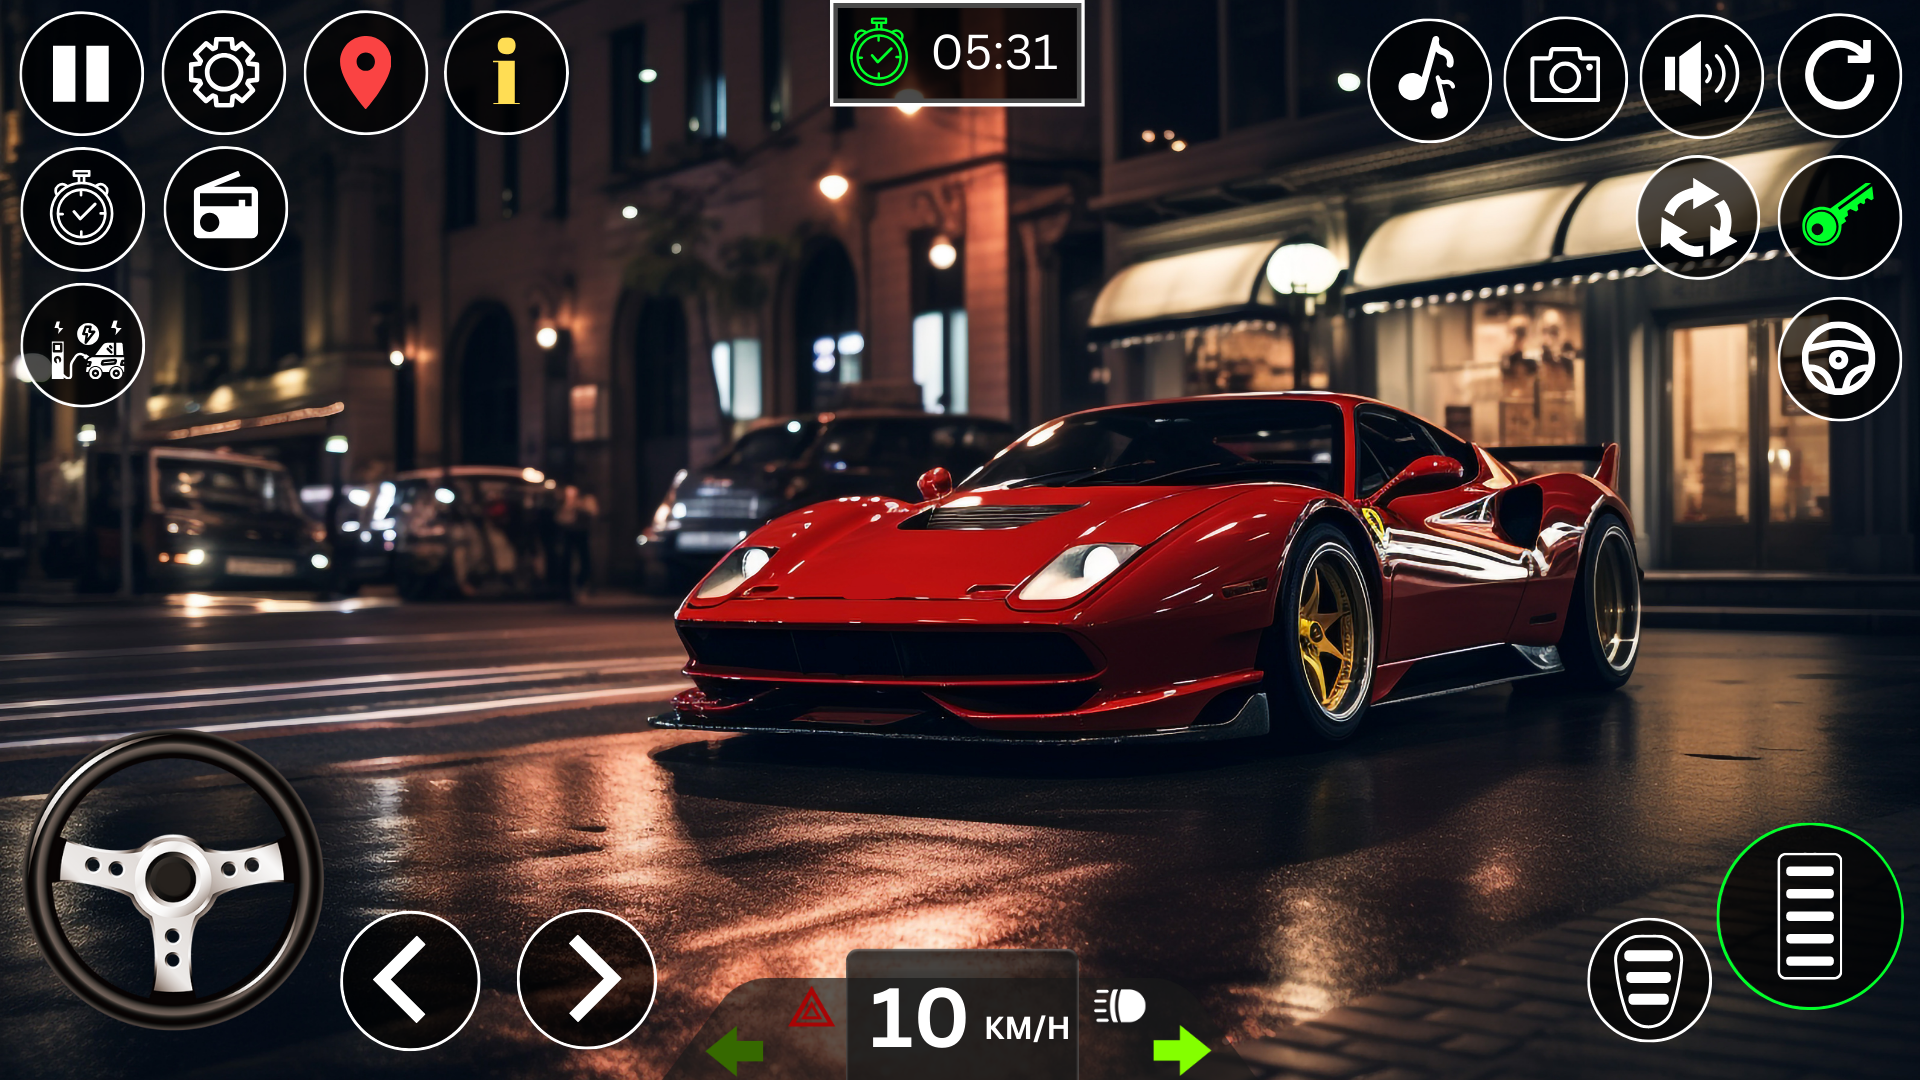 Screenshot 1 of Auto Simulator Meister Fahren 1.0.41